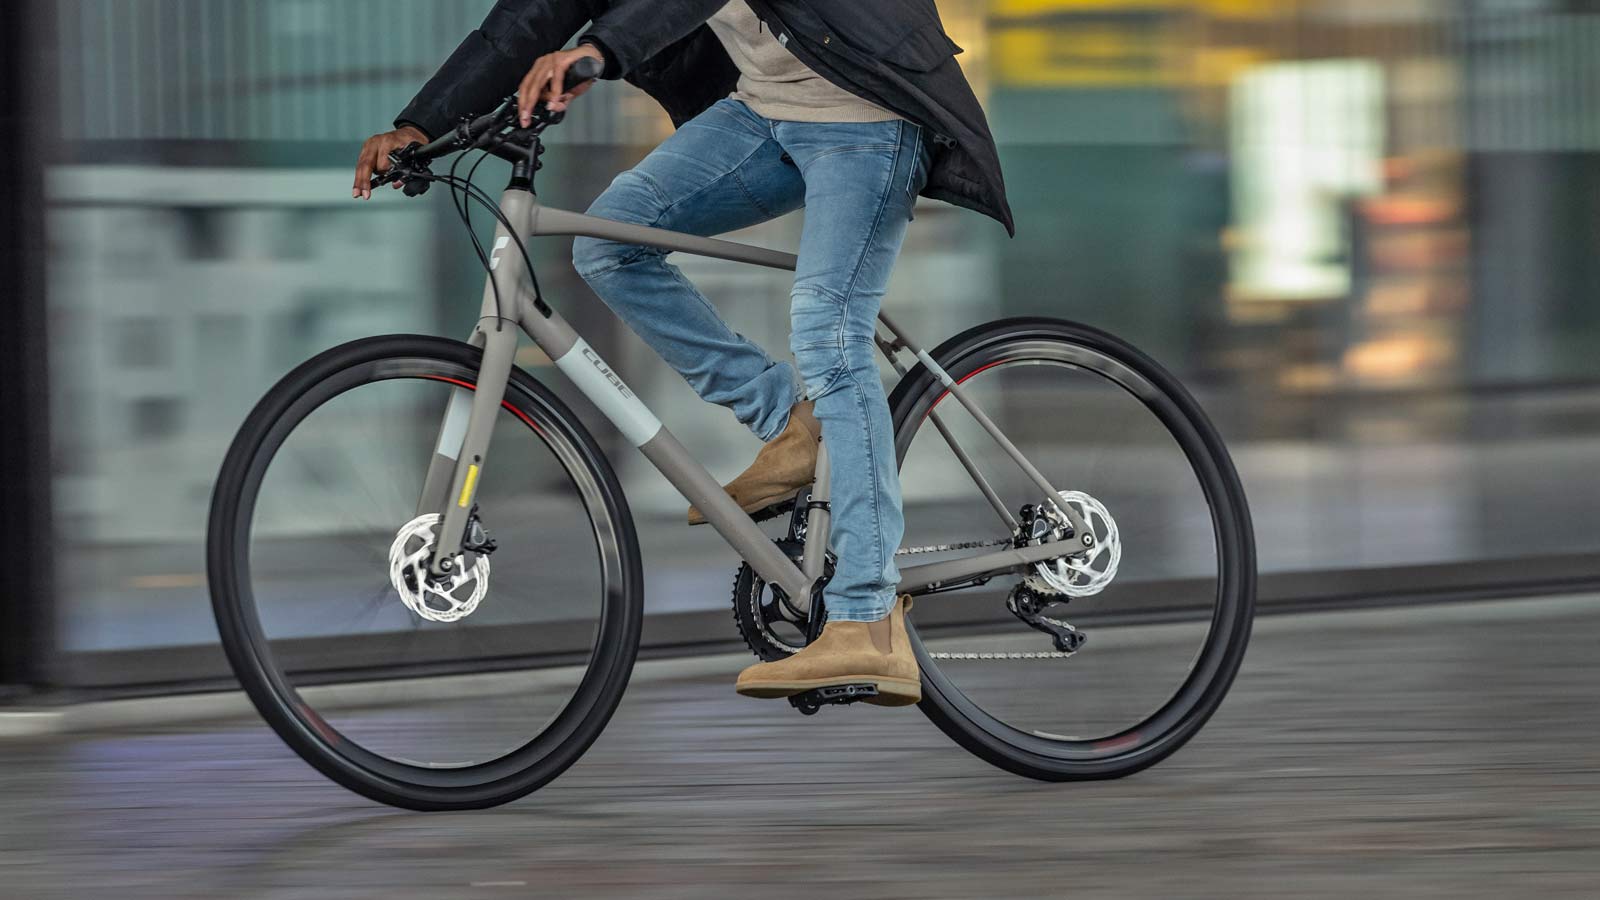 2021 Cube SL Road bike is an affordable, versatile alloy flat bar all-road & gravel bike, city riding